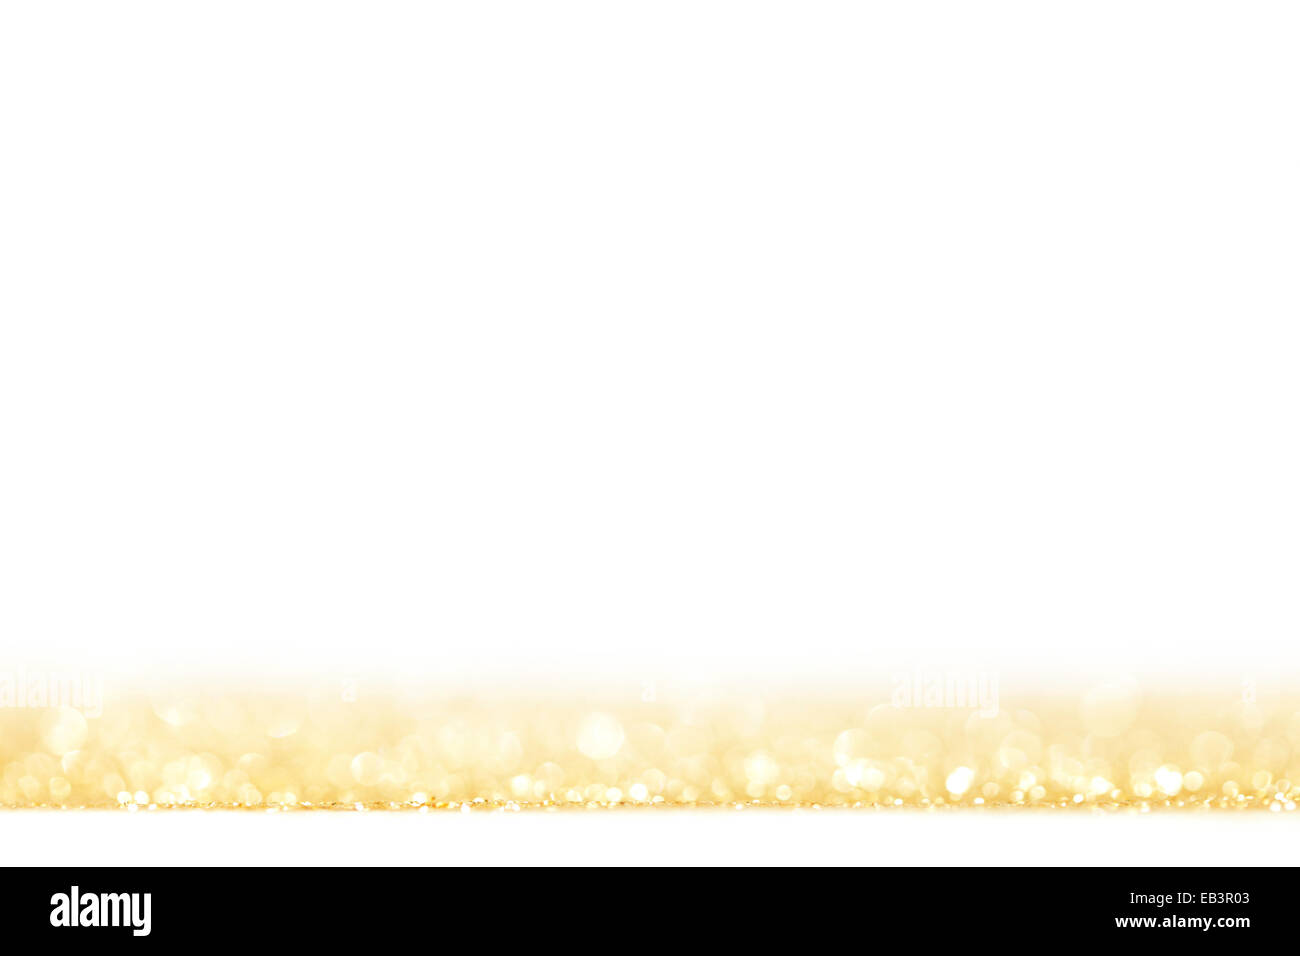 Golden festive glitter background with defocused lights Stock Photo